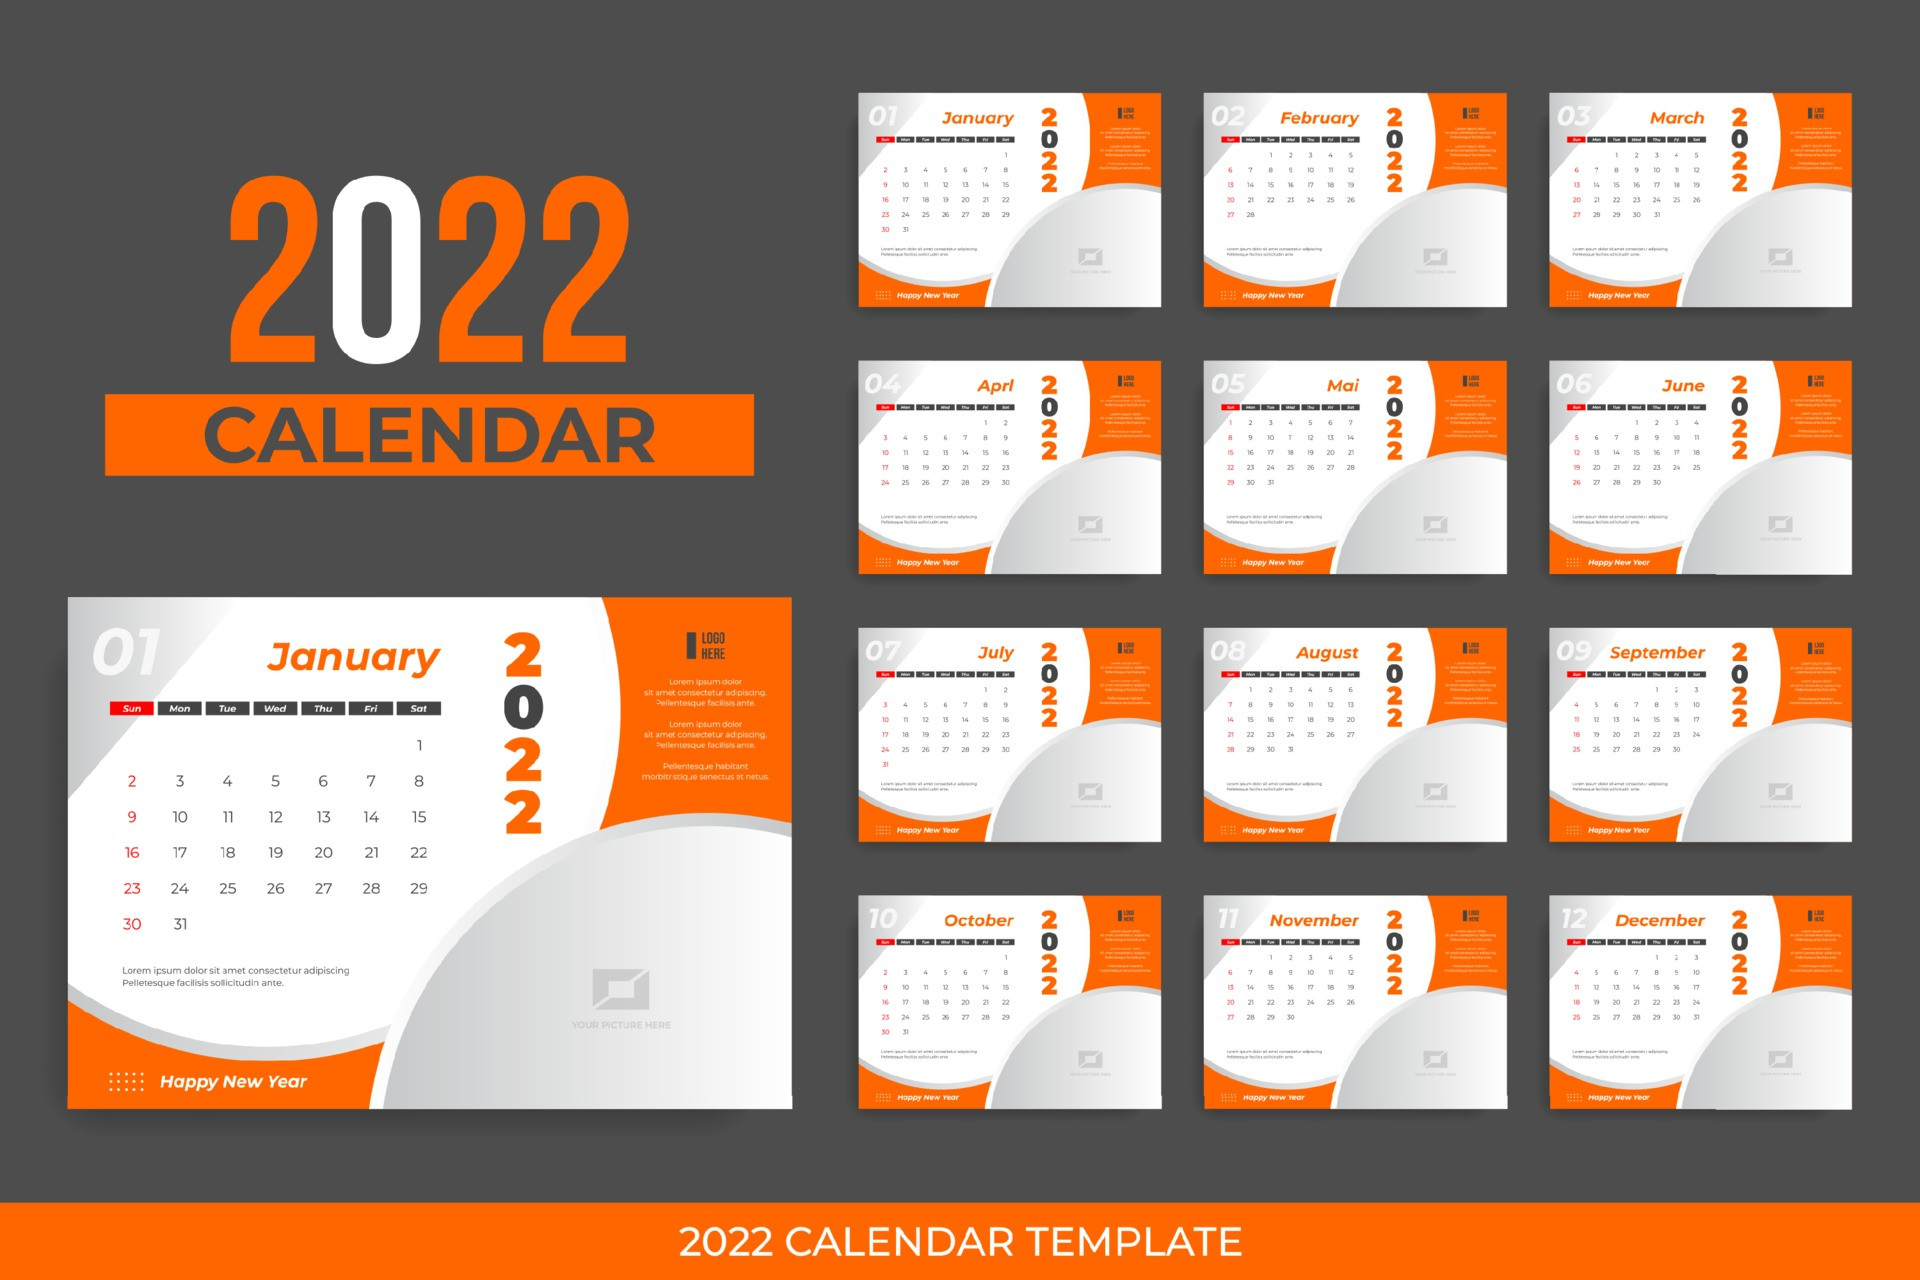 Desk Calendar 2022 Vector Art, Icons, And Graphics For Free Download-Calendar 2022 Vector Free Download